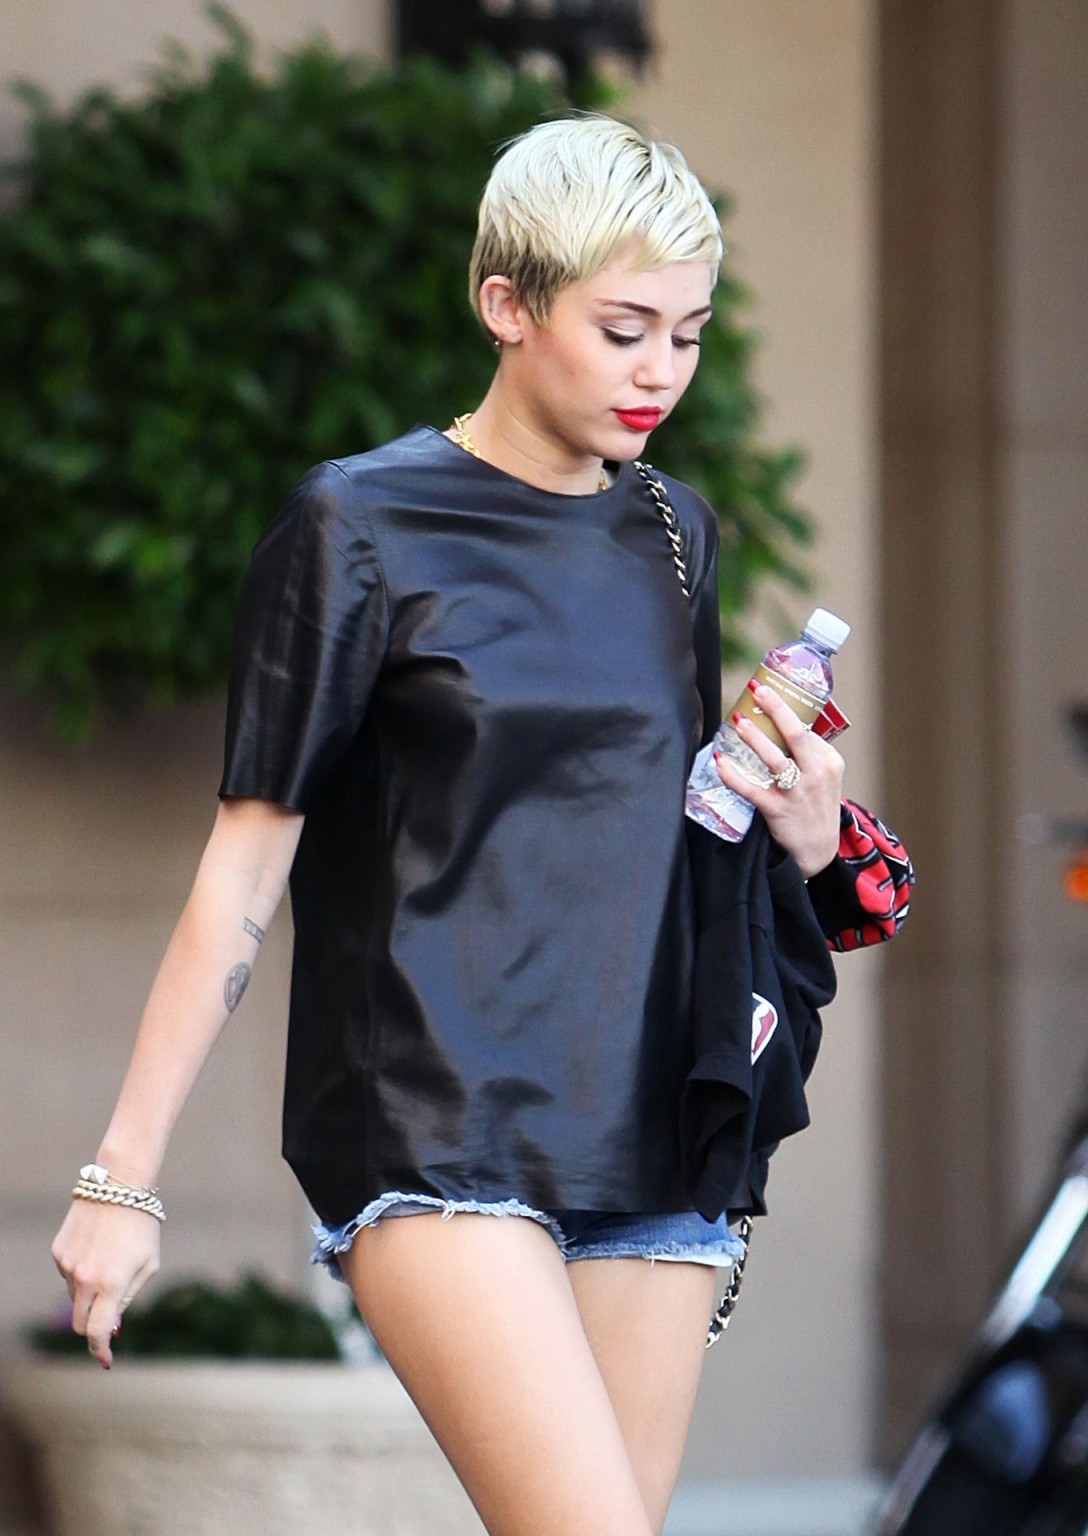 Miley Cyrus langbeinig in Jeans-Shorts und Leder-Top in Beverly Hills
 #75235251